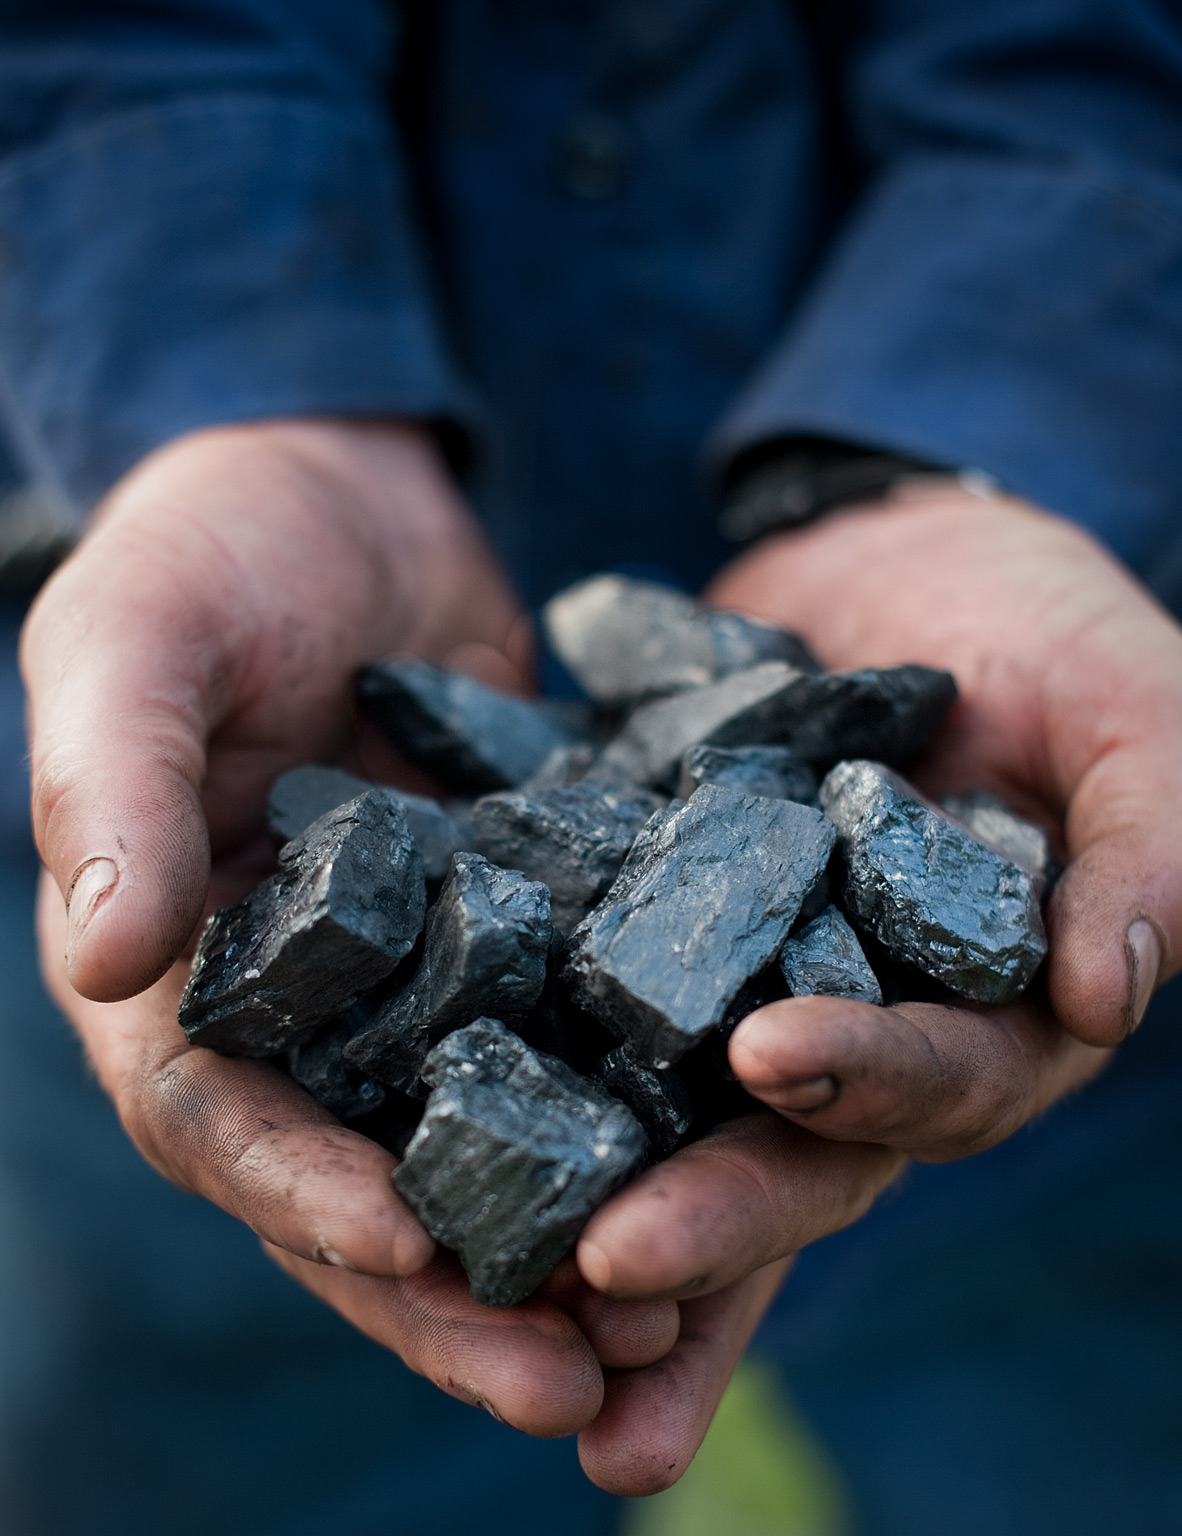 Hands of a Virginia Coal miner holding a handful of Virginia coal